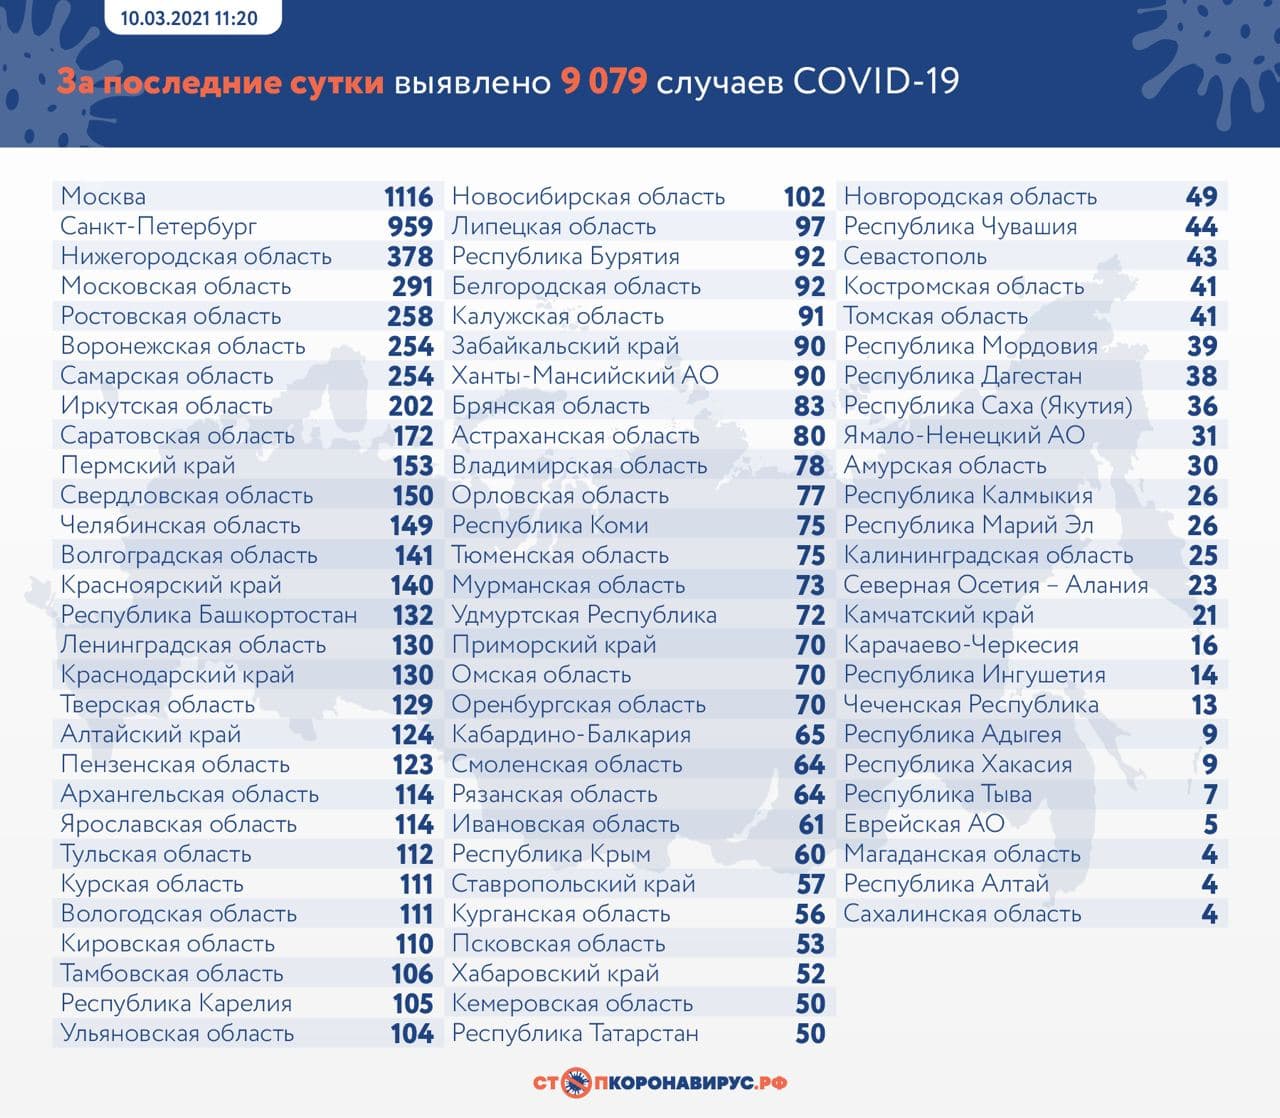 Оперативная статистика по коронавирусу в России на 10 марта